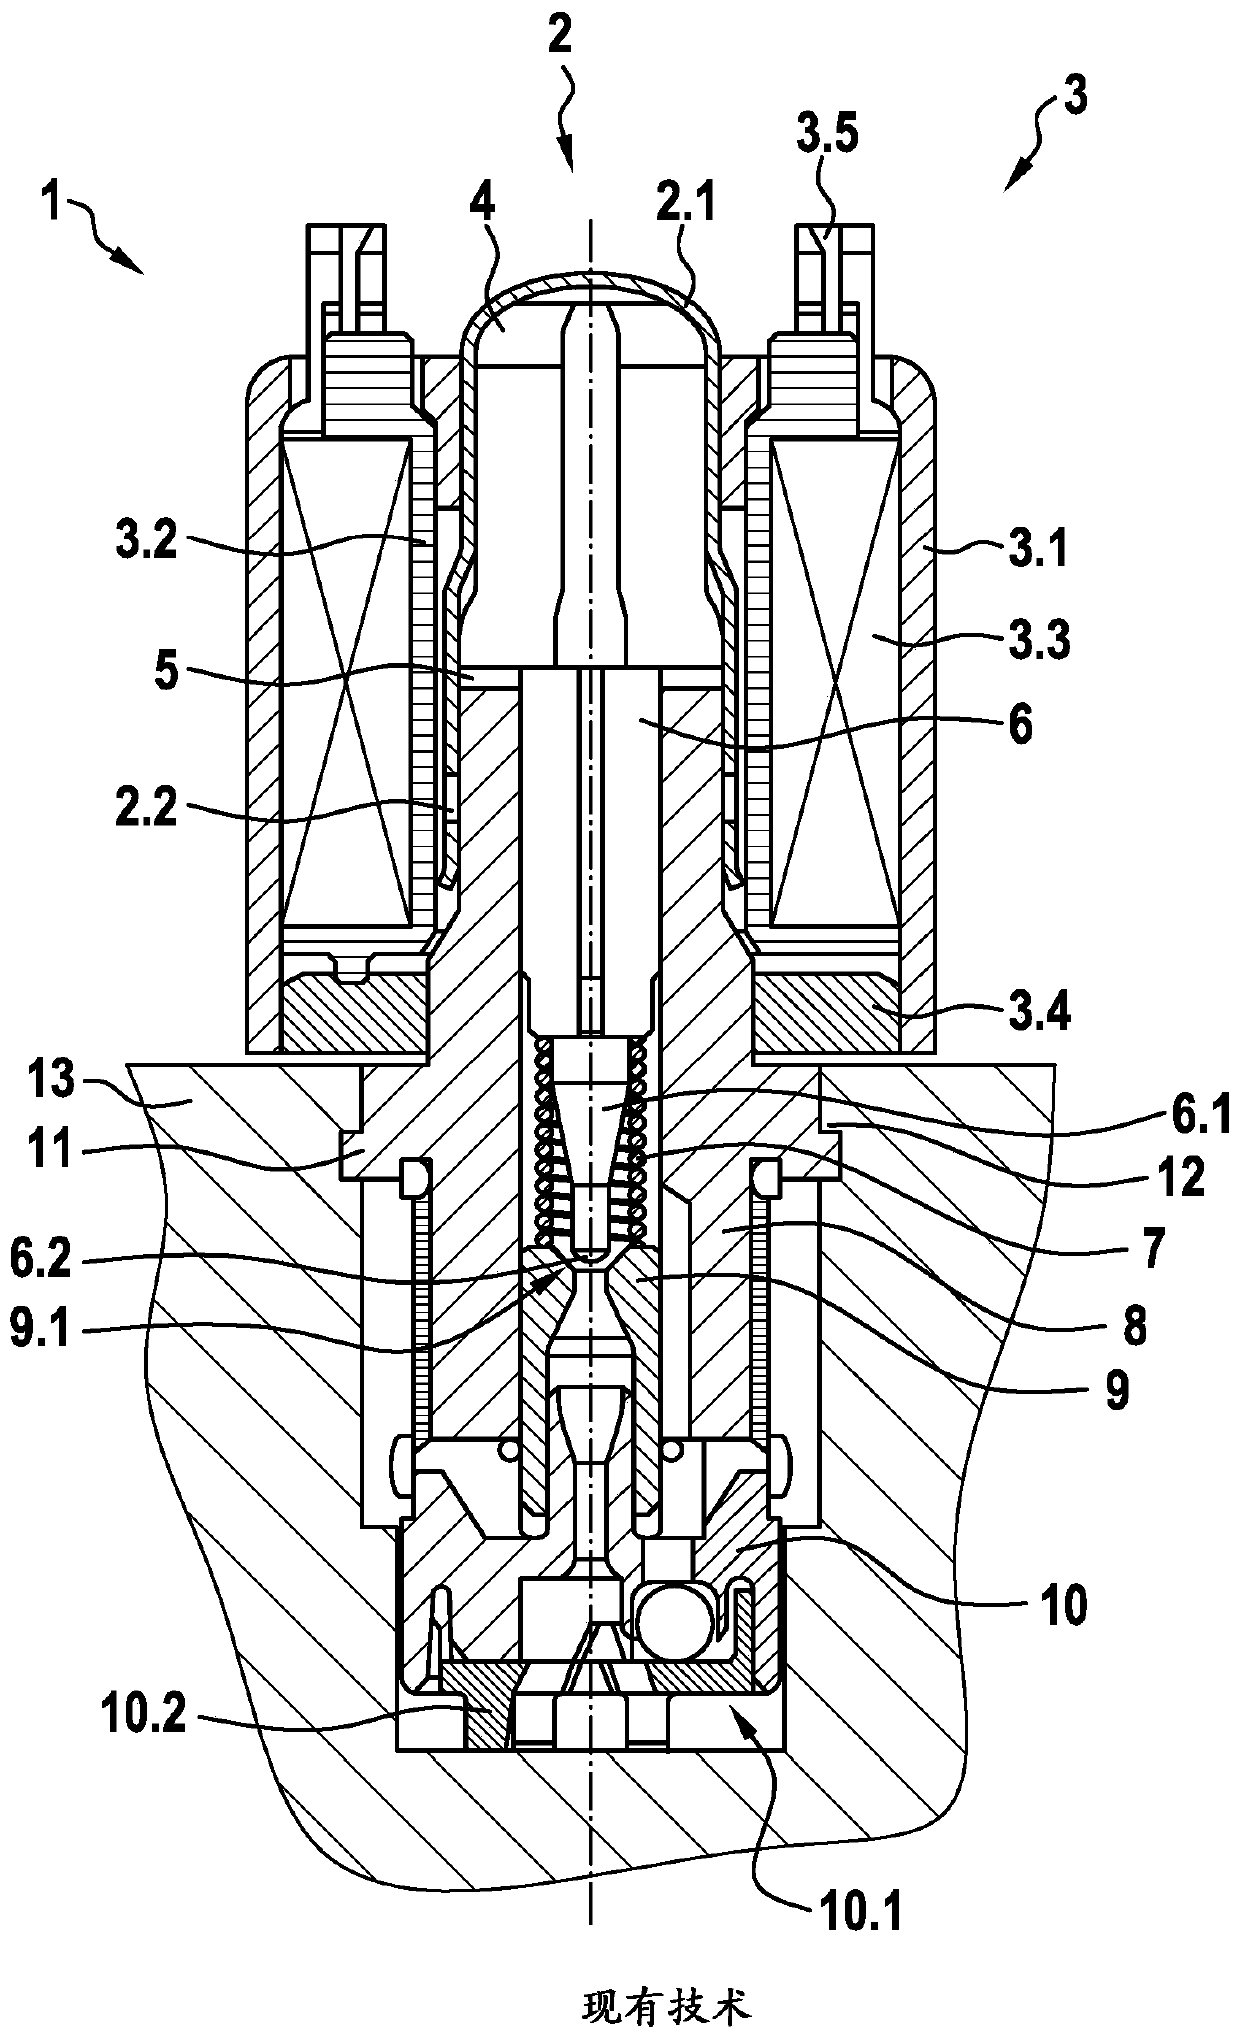 Solenoid valve for controlling the brake pressure of a wheel brake